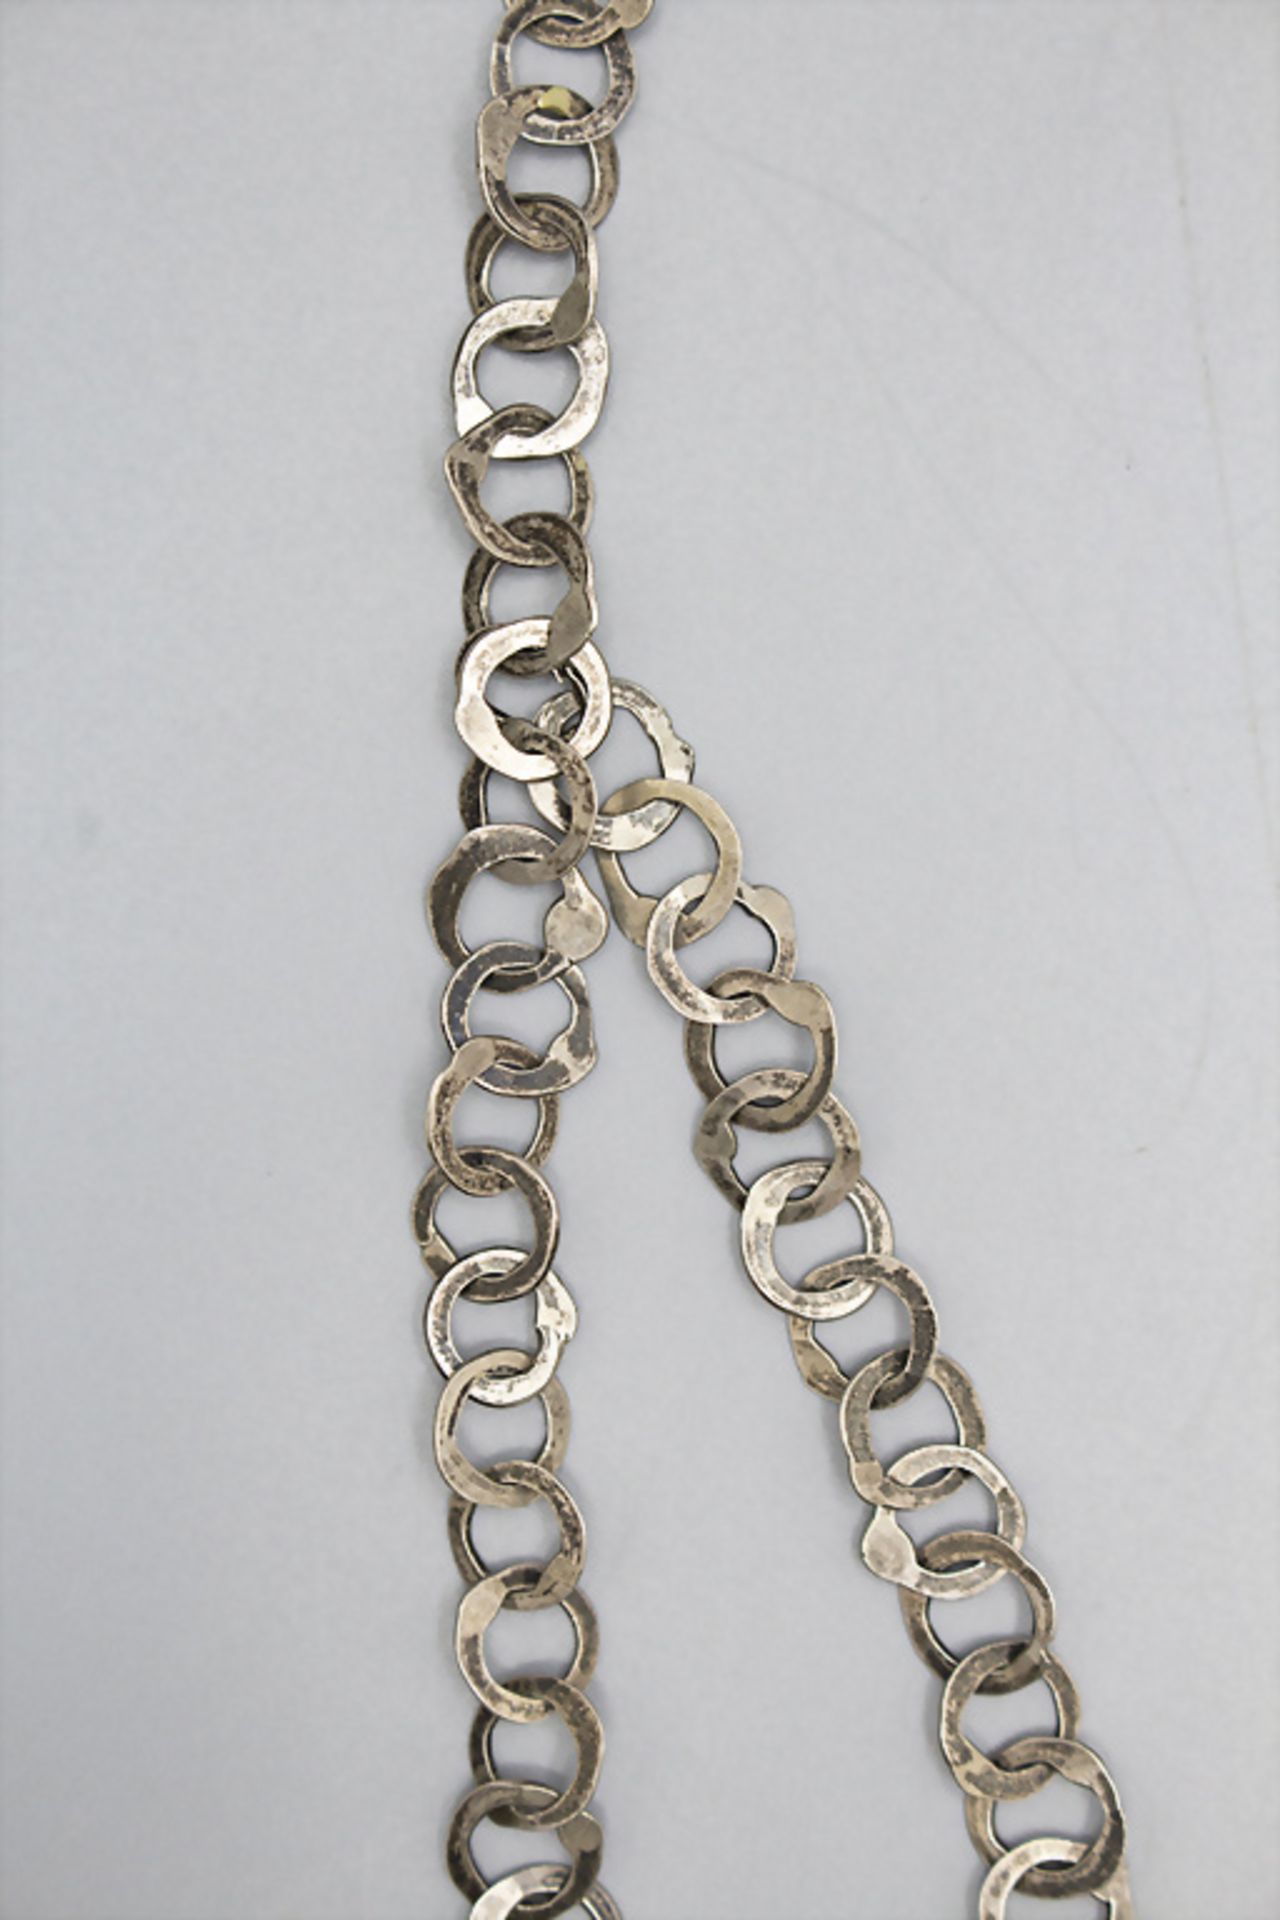 Vintage Silberkette / A vintage silver necklace, wohl 1970er Jahre - Image 3 of 3